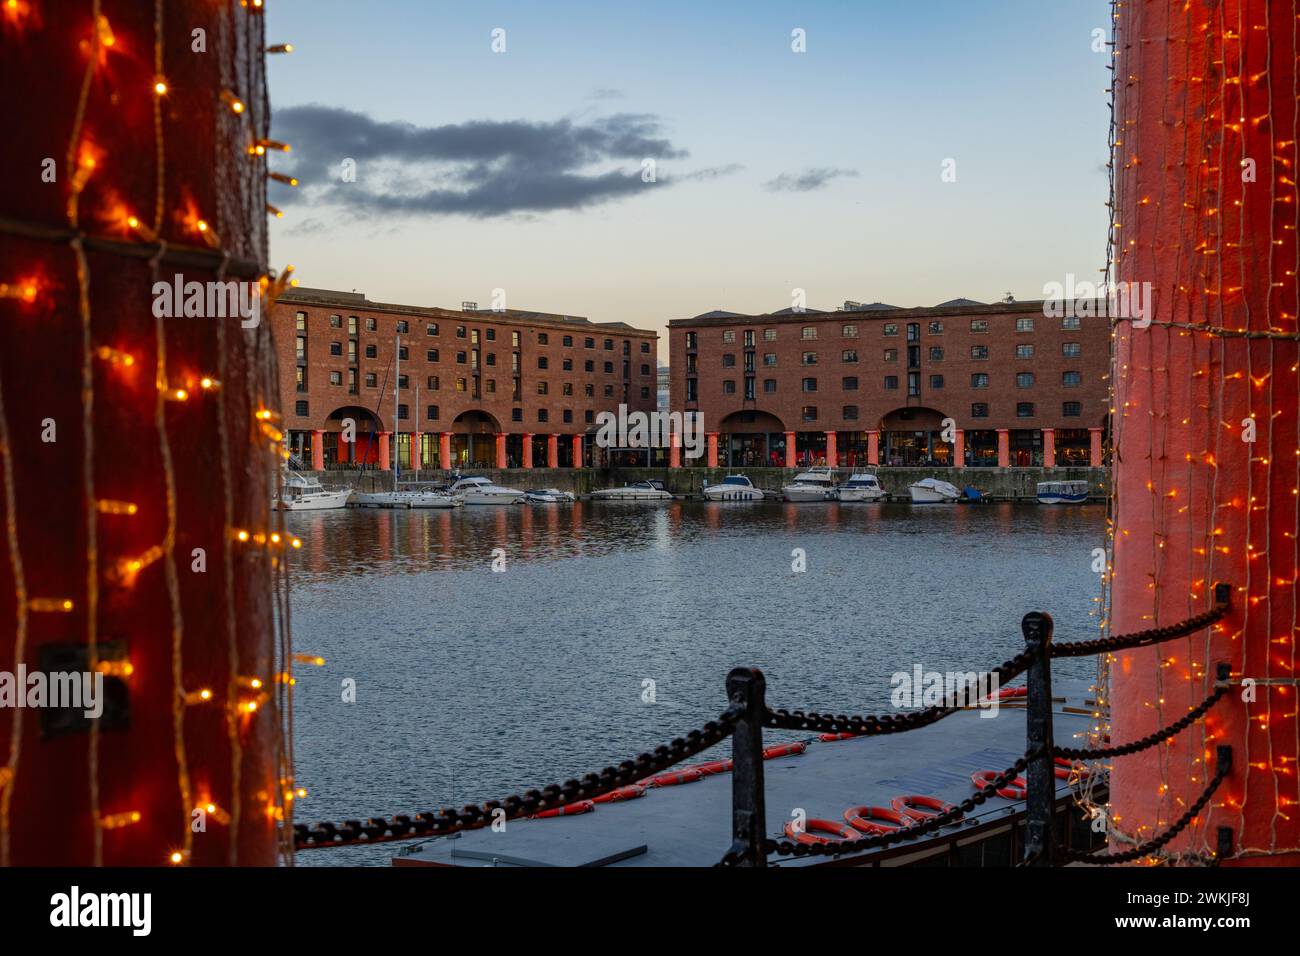 The Royal Albert Dock, Liverpool L3 4AQ Stock Photo